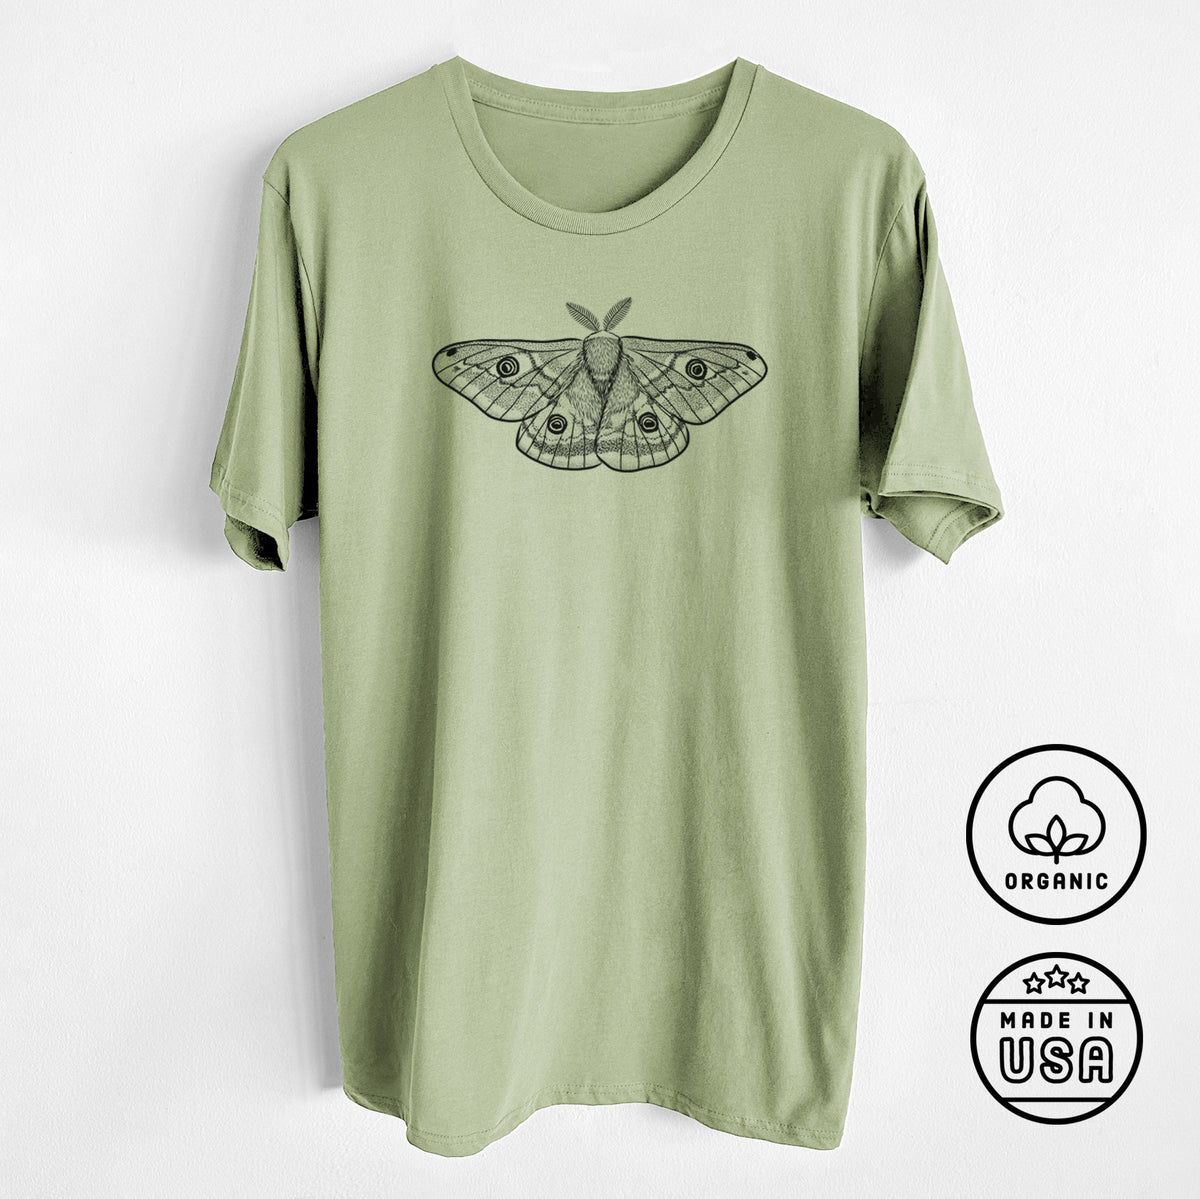 Saturnia pavonia - Small Emperor Moth - Unisex Crewneck - Made in USA - 100% Organic Cotton